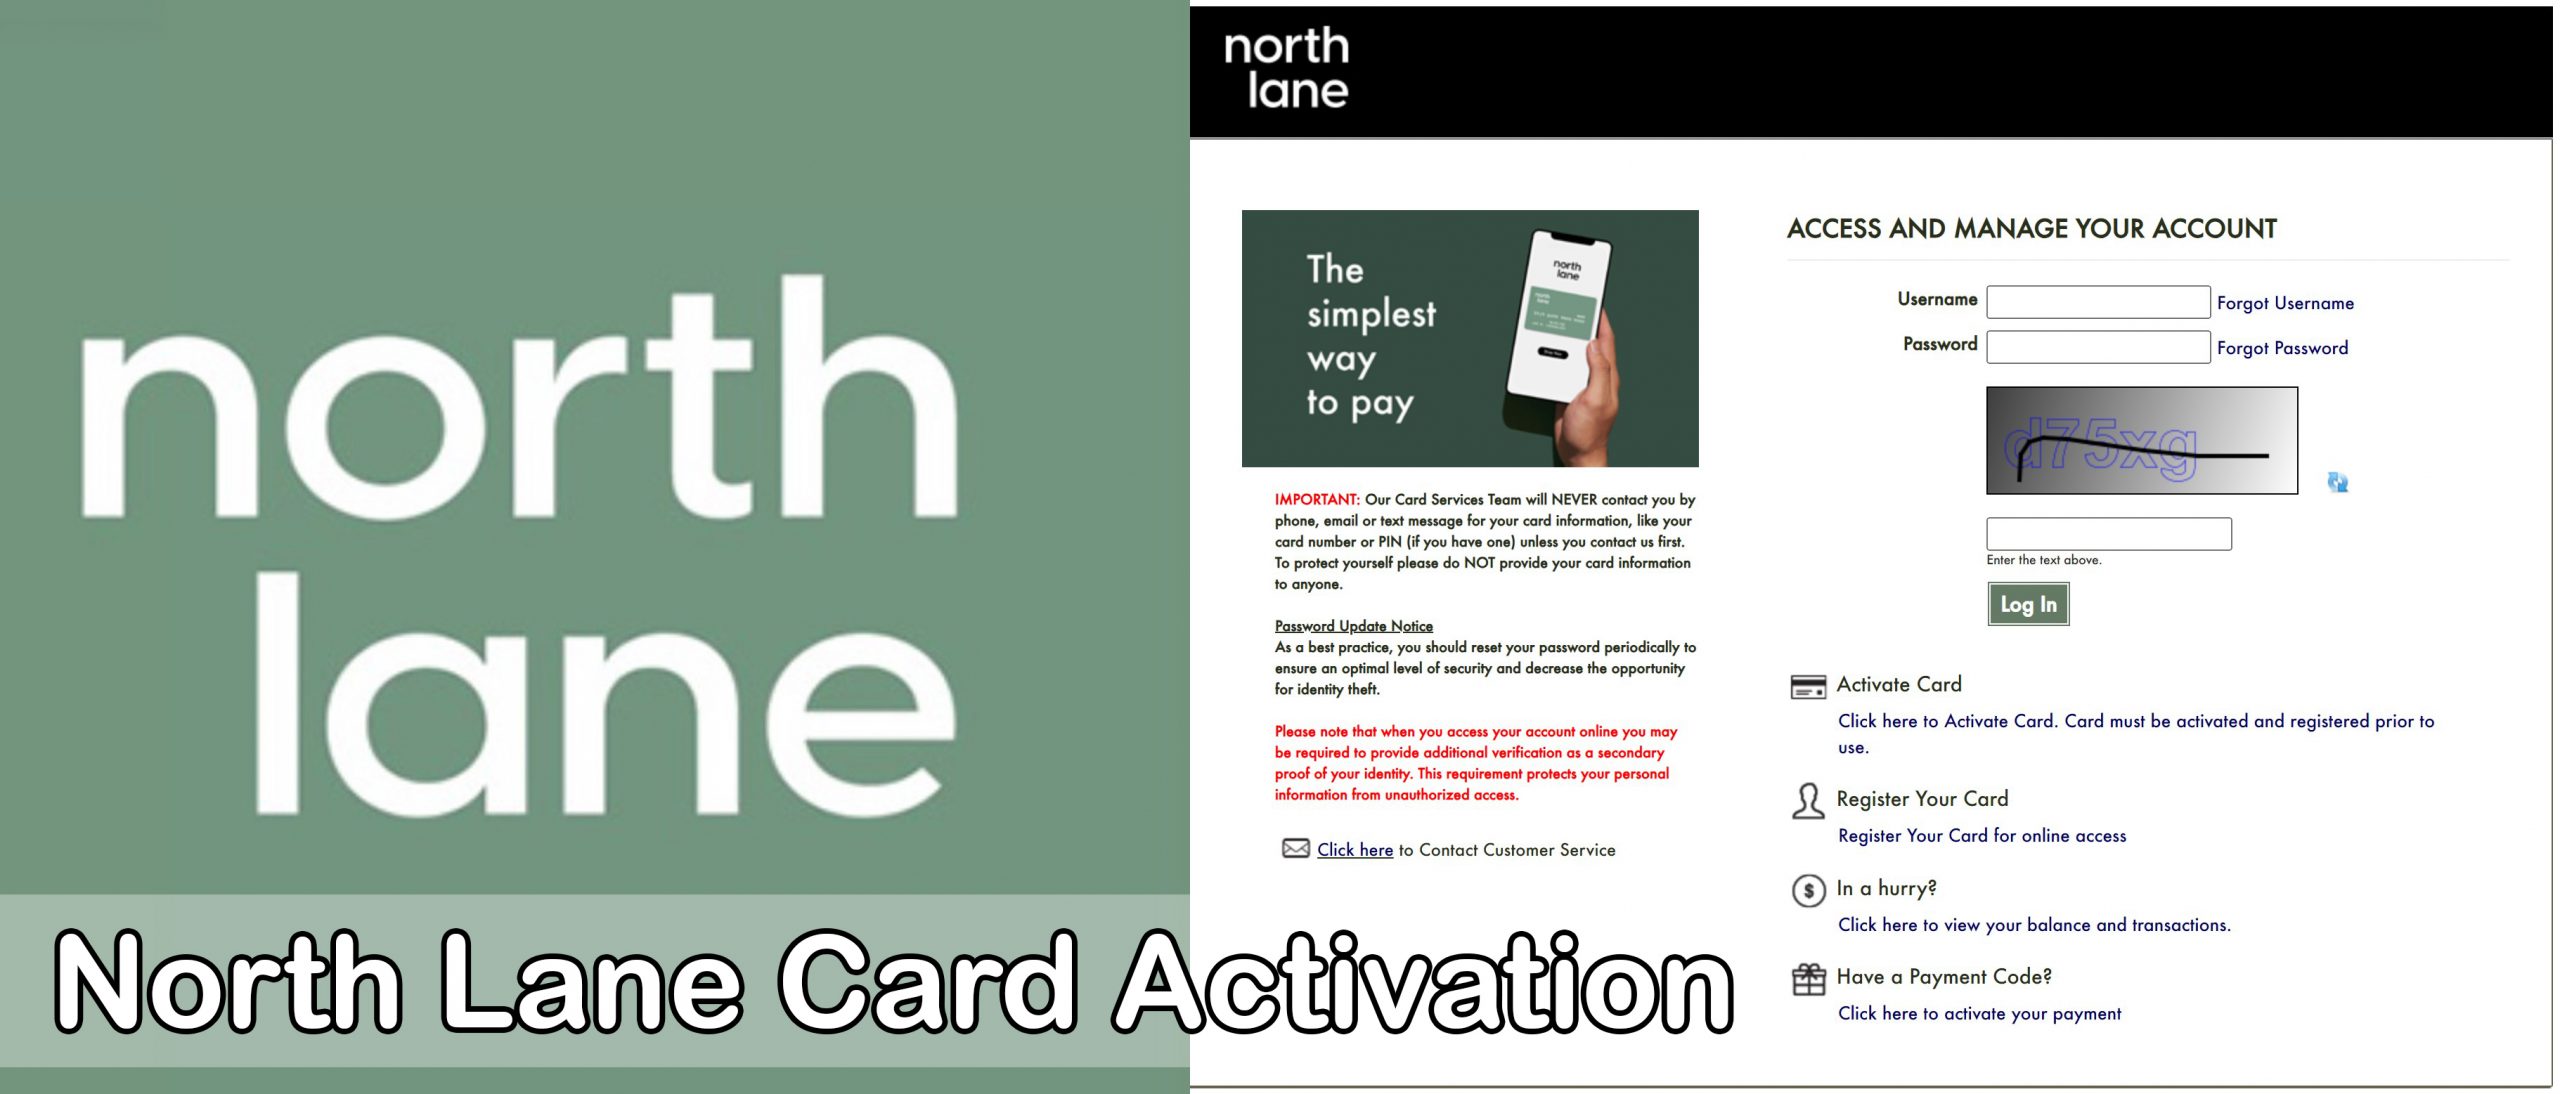 North Lane Card Activation